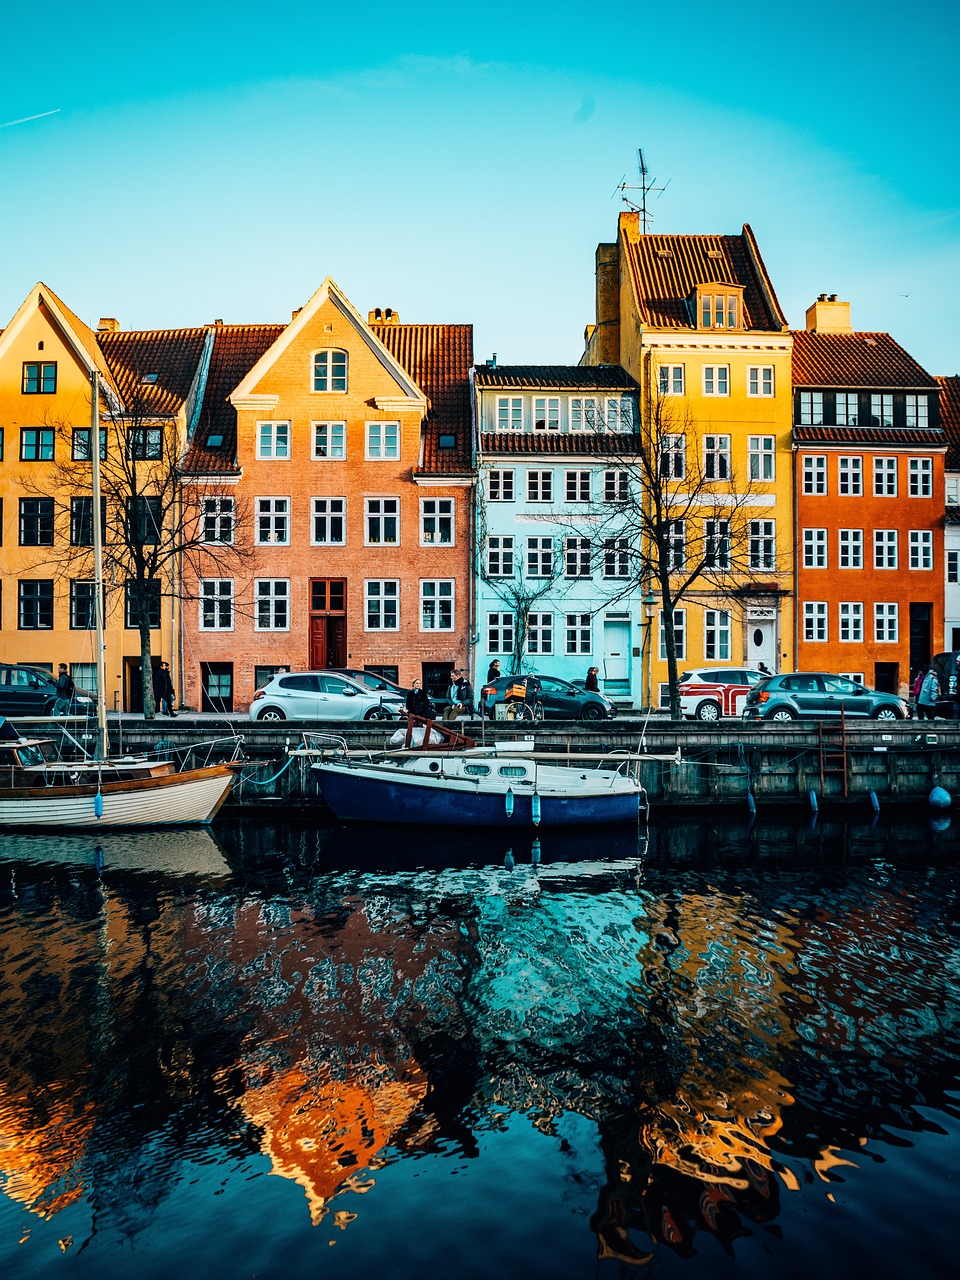 Design, Food, and History: 5-Day Copenhagen Exploration